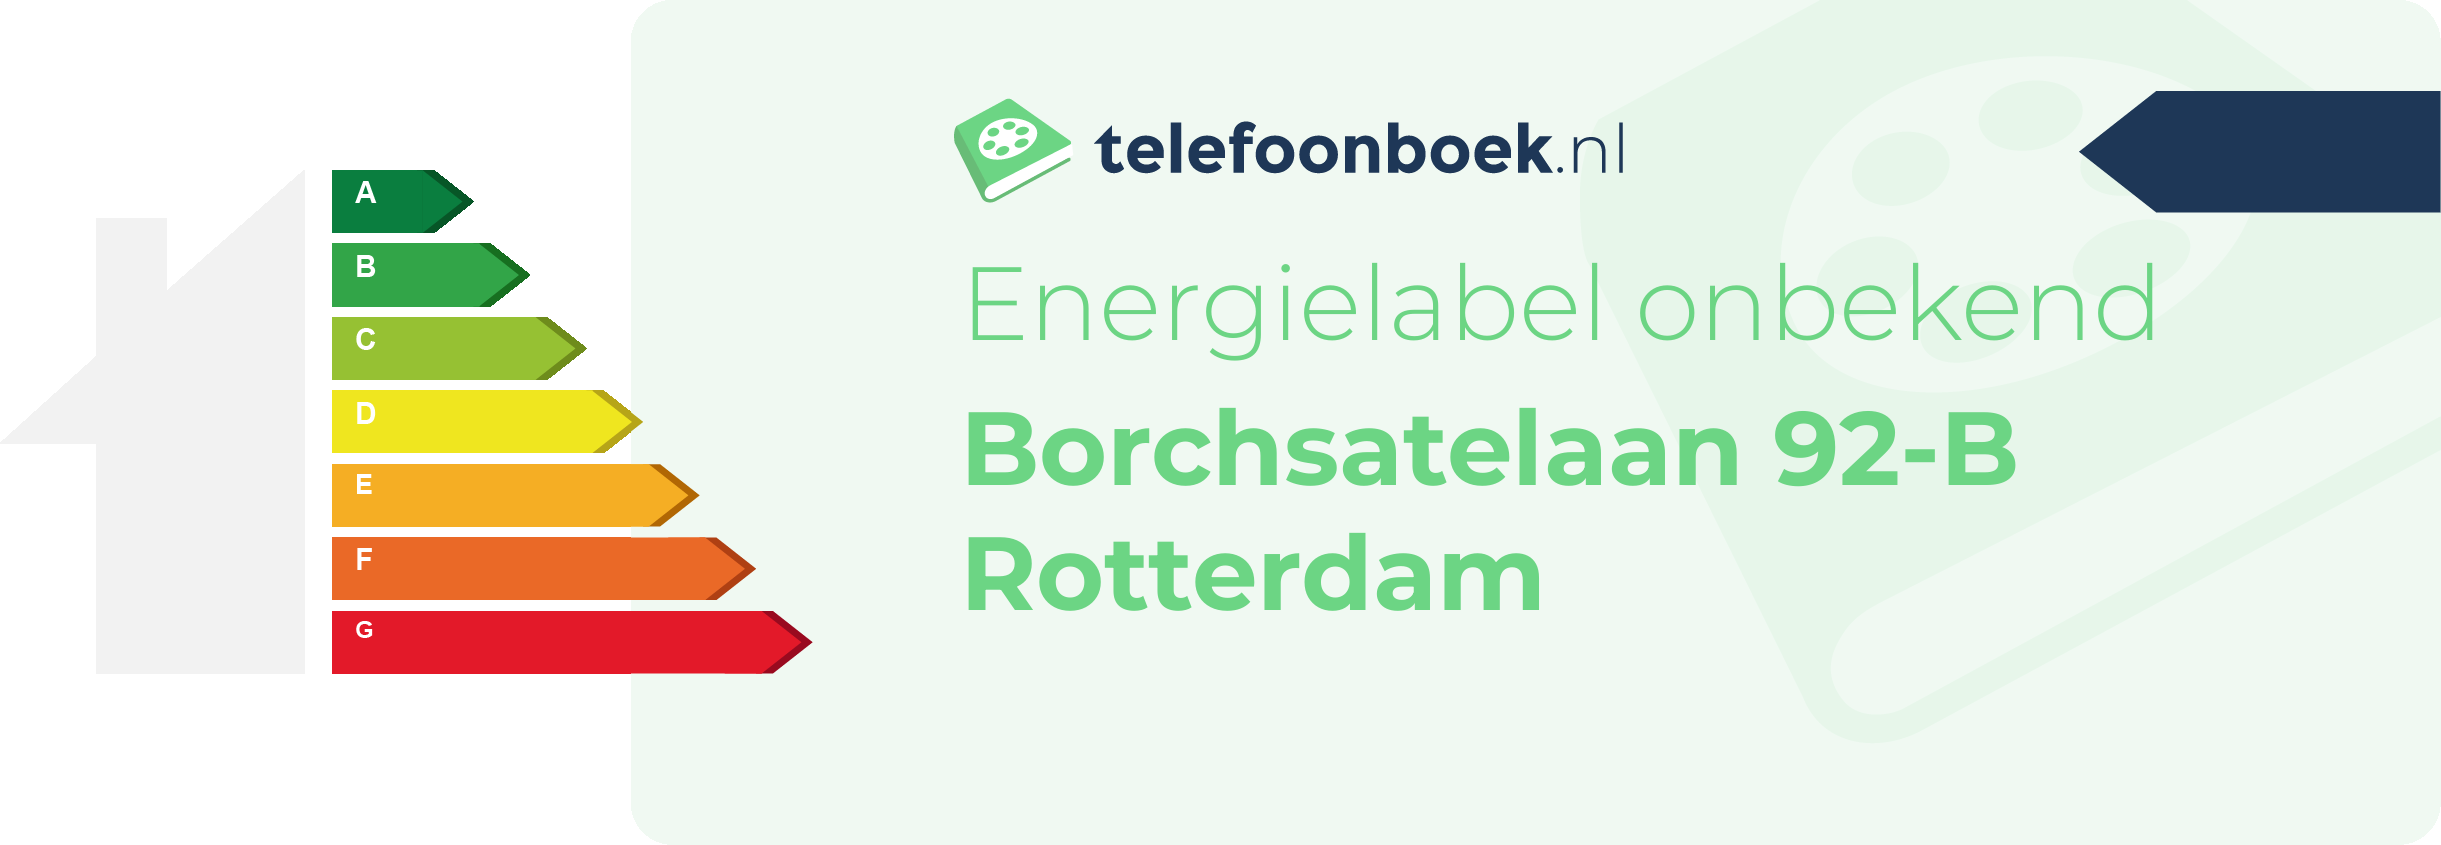 Energielabel Borchsatelaan 92-B Rotterdam